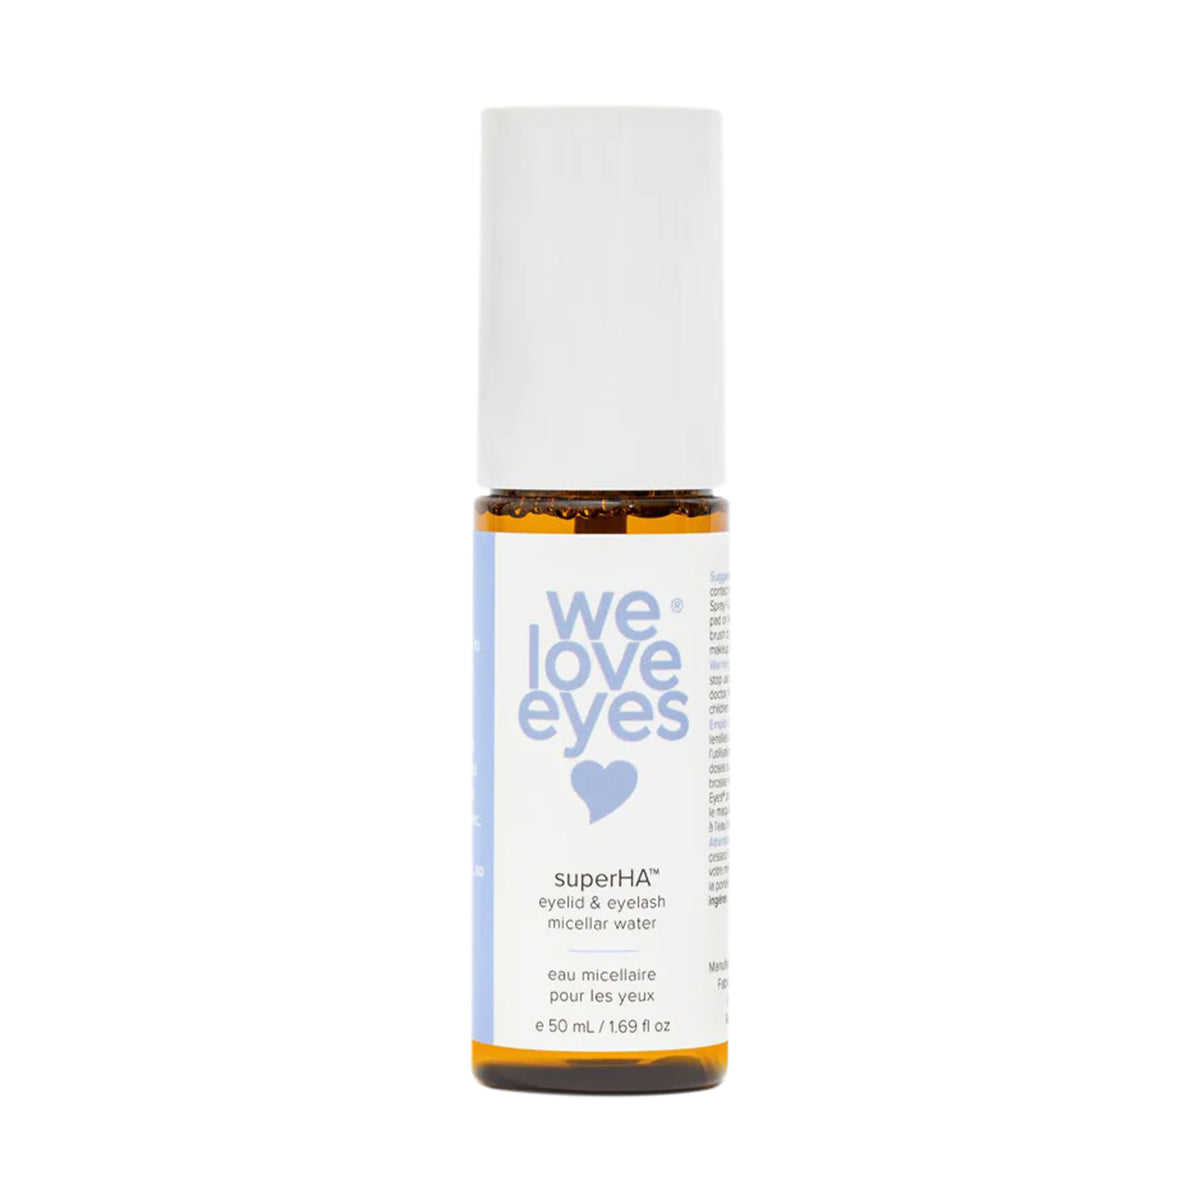 superHA Eyelid & Eyelash Micellar Water Make-up Remover (50mL)